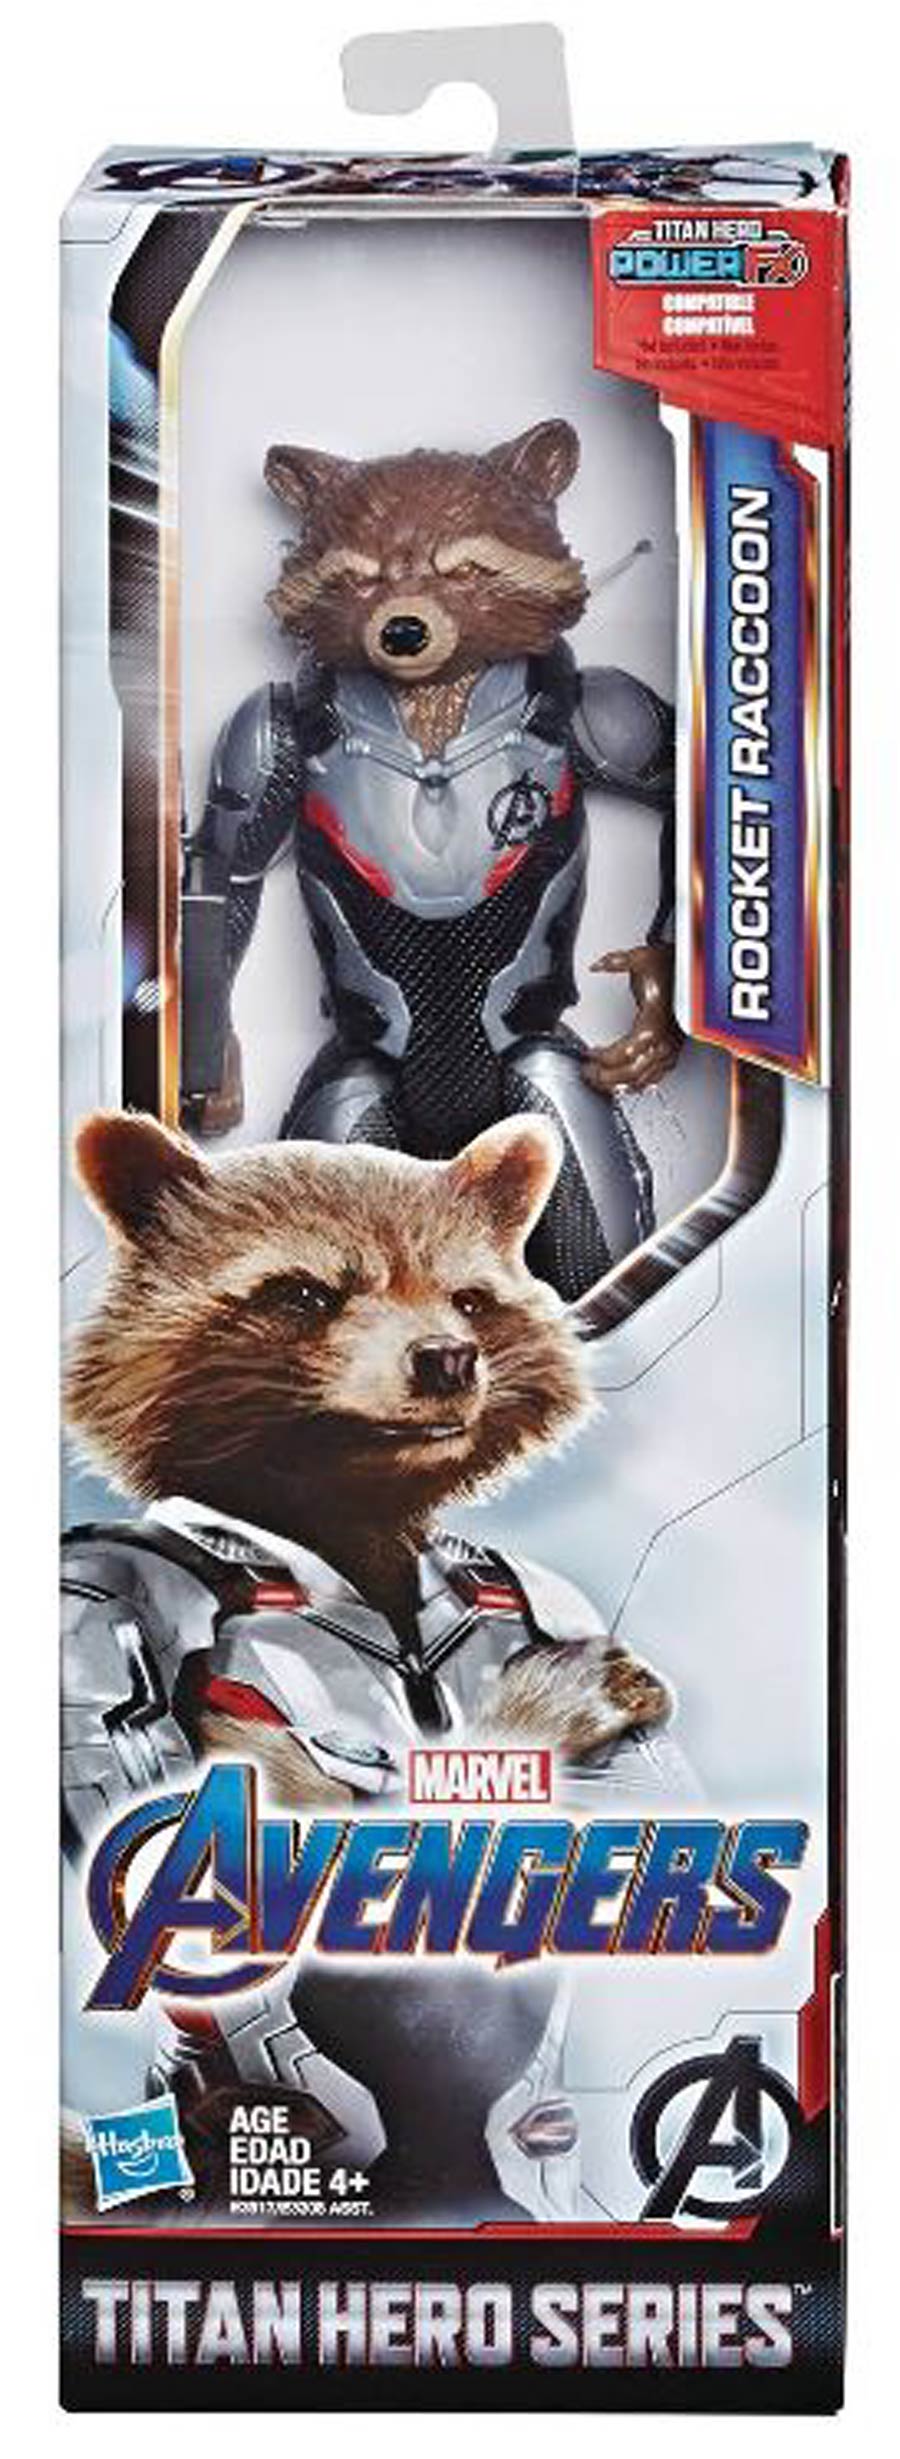 Avengers Endgame Titan Heroes 12-Inch Action Figure Assortment 201901-B - Rocket Raccoon